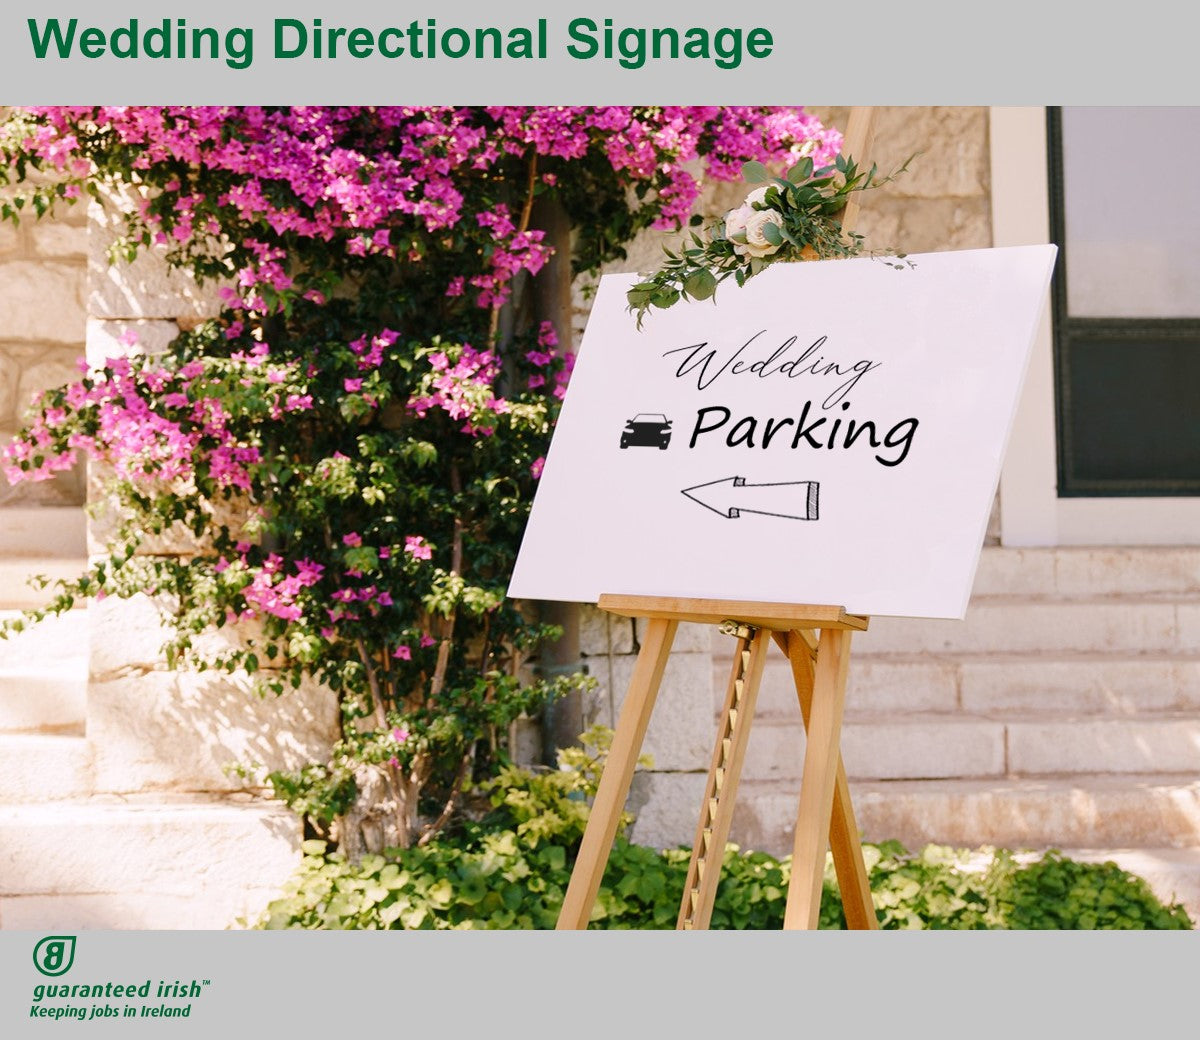 Wedding Directional & Infographic Signage - Parking